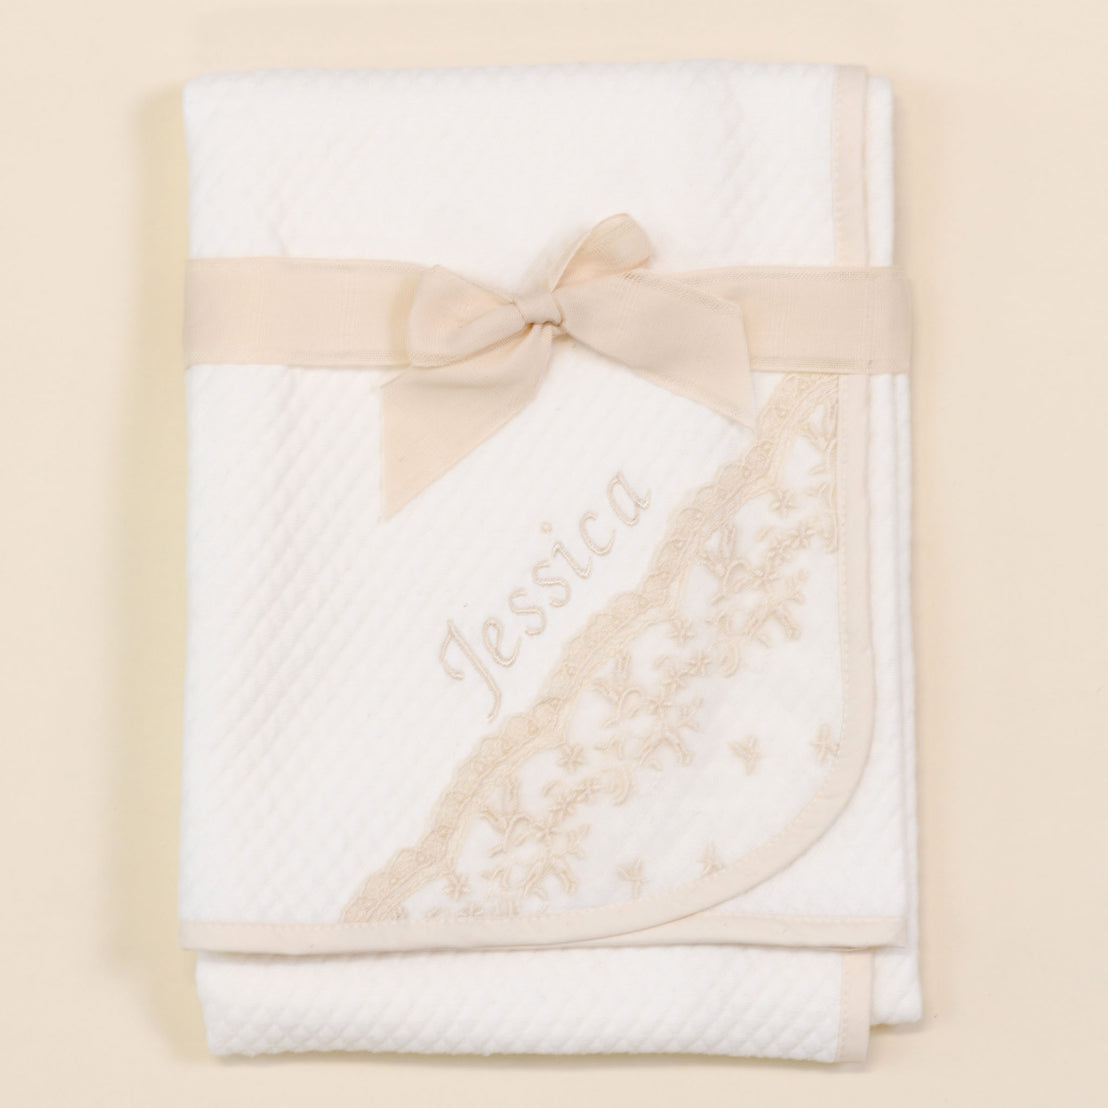 Jessica Personalized Blanket